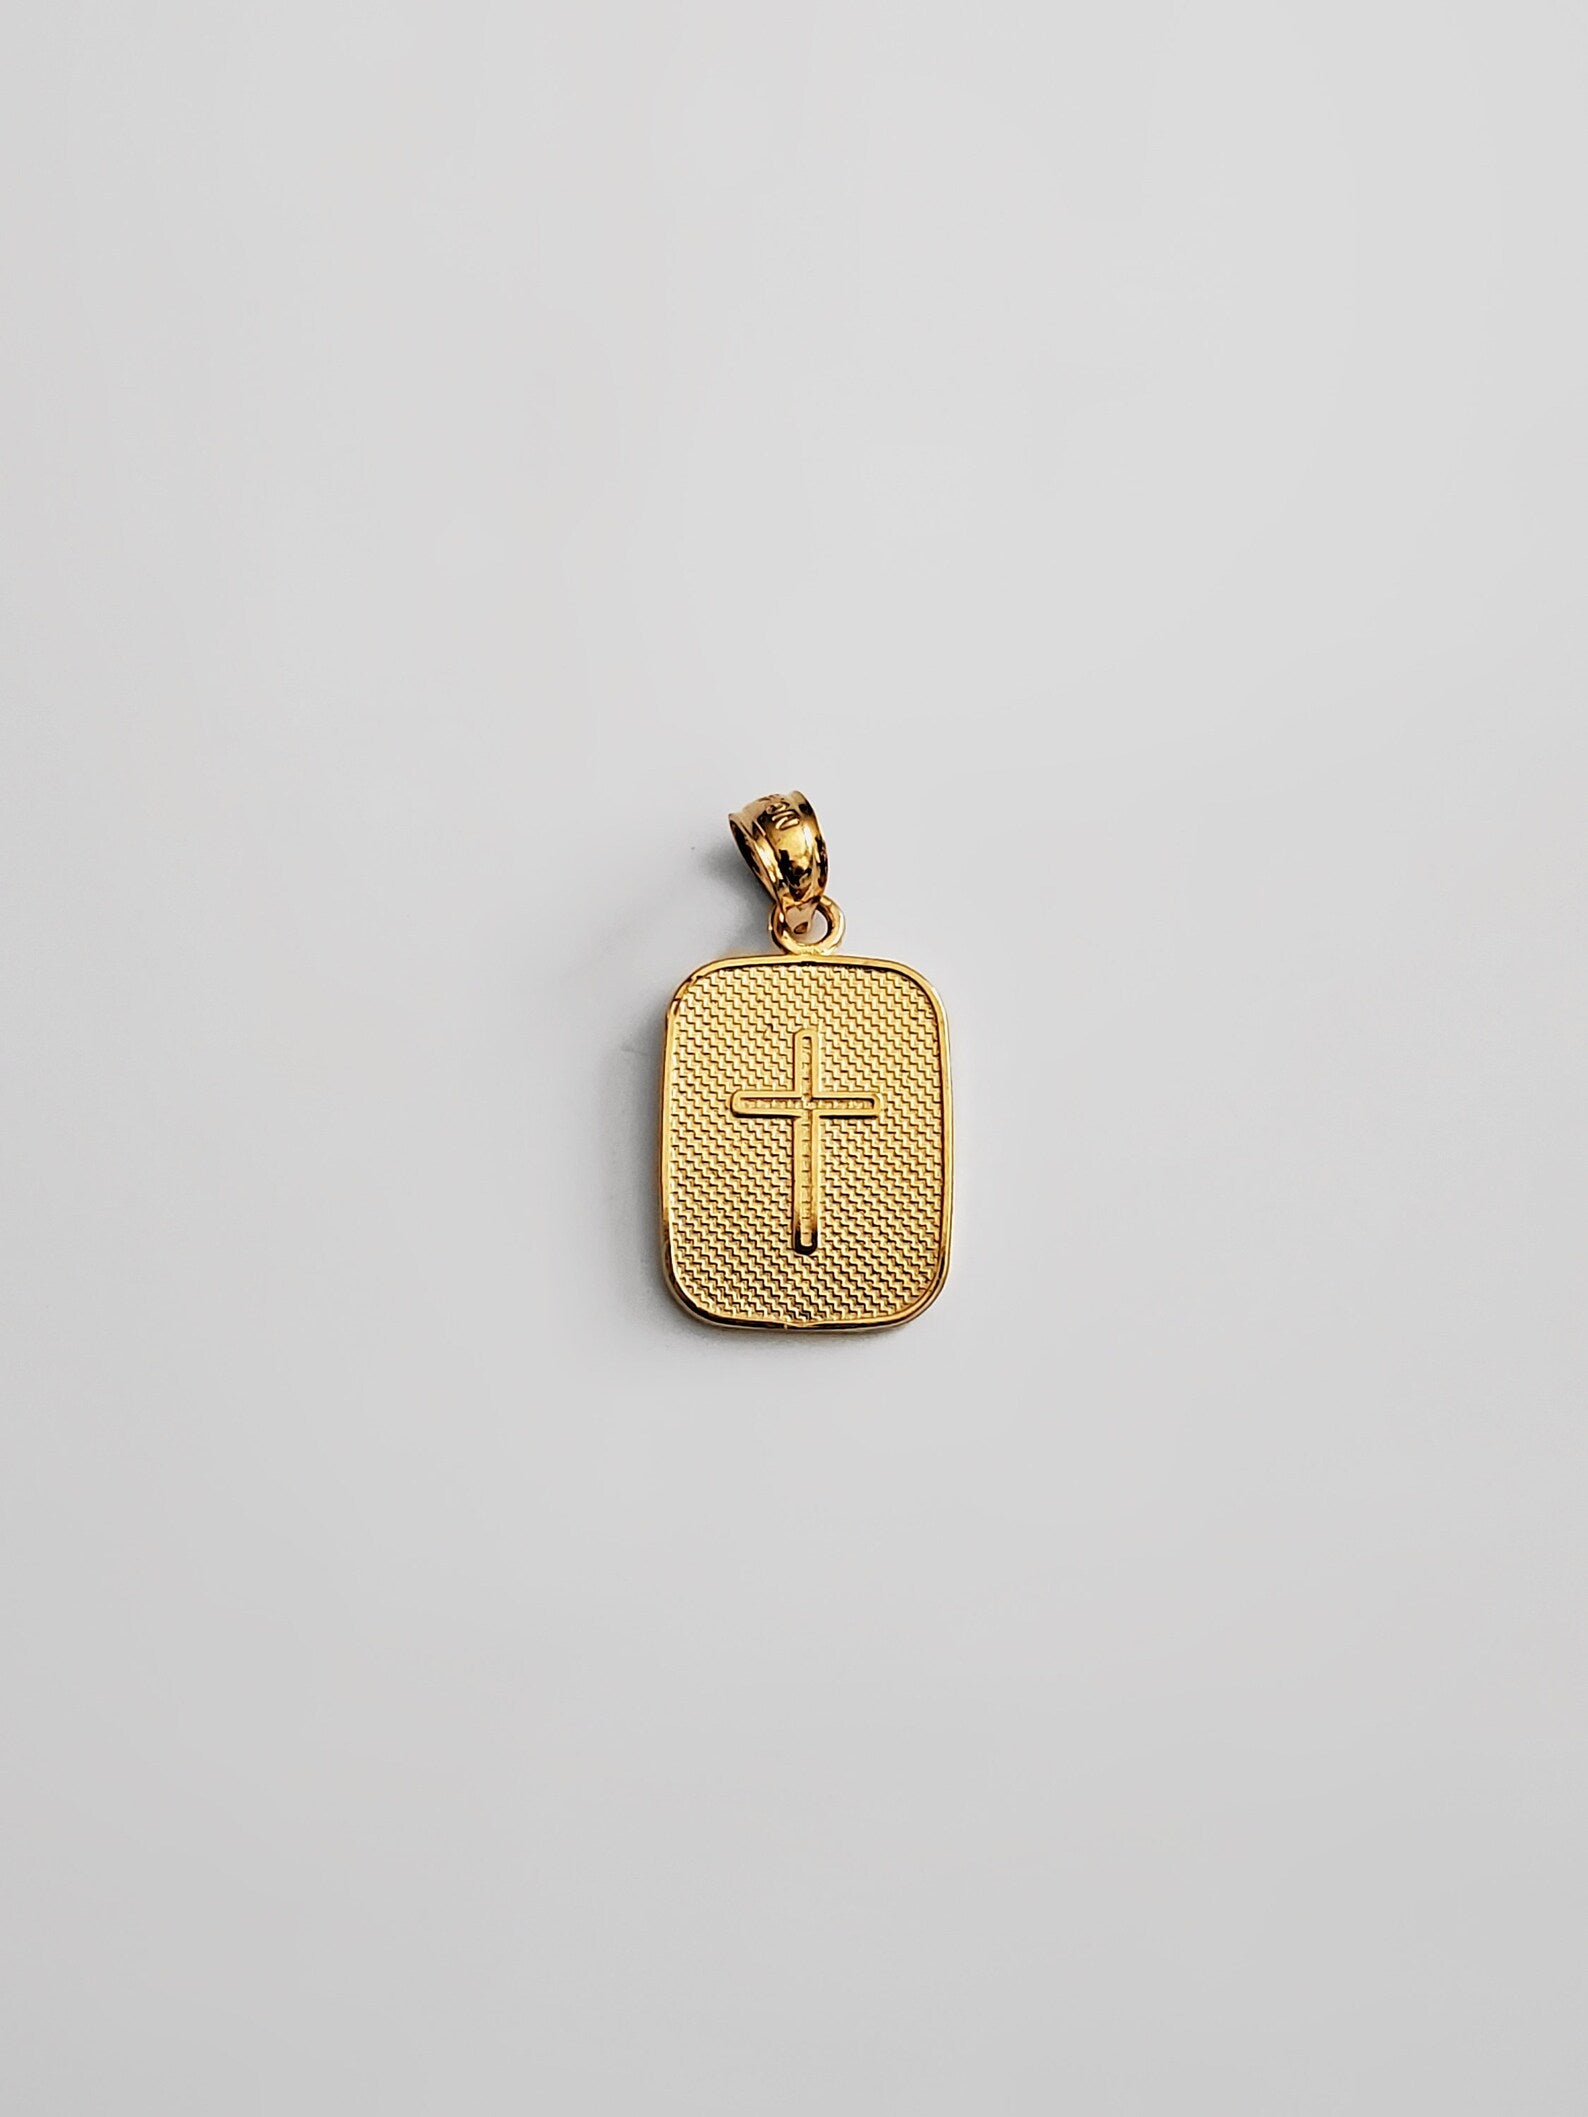 Gold Espiritu Santo Dove Pendant Model-0253 - Charlie & Co. Jewelry